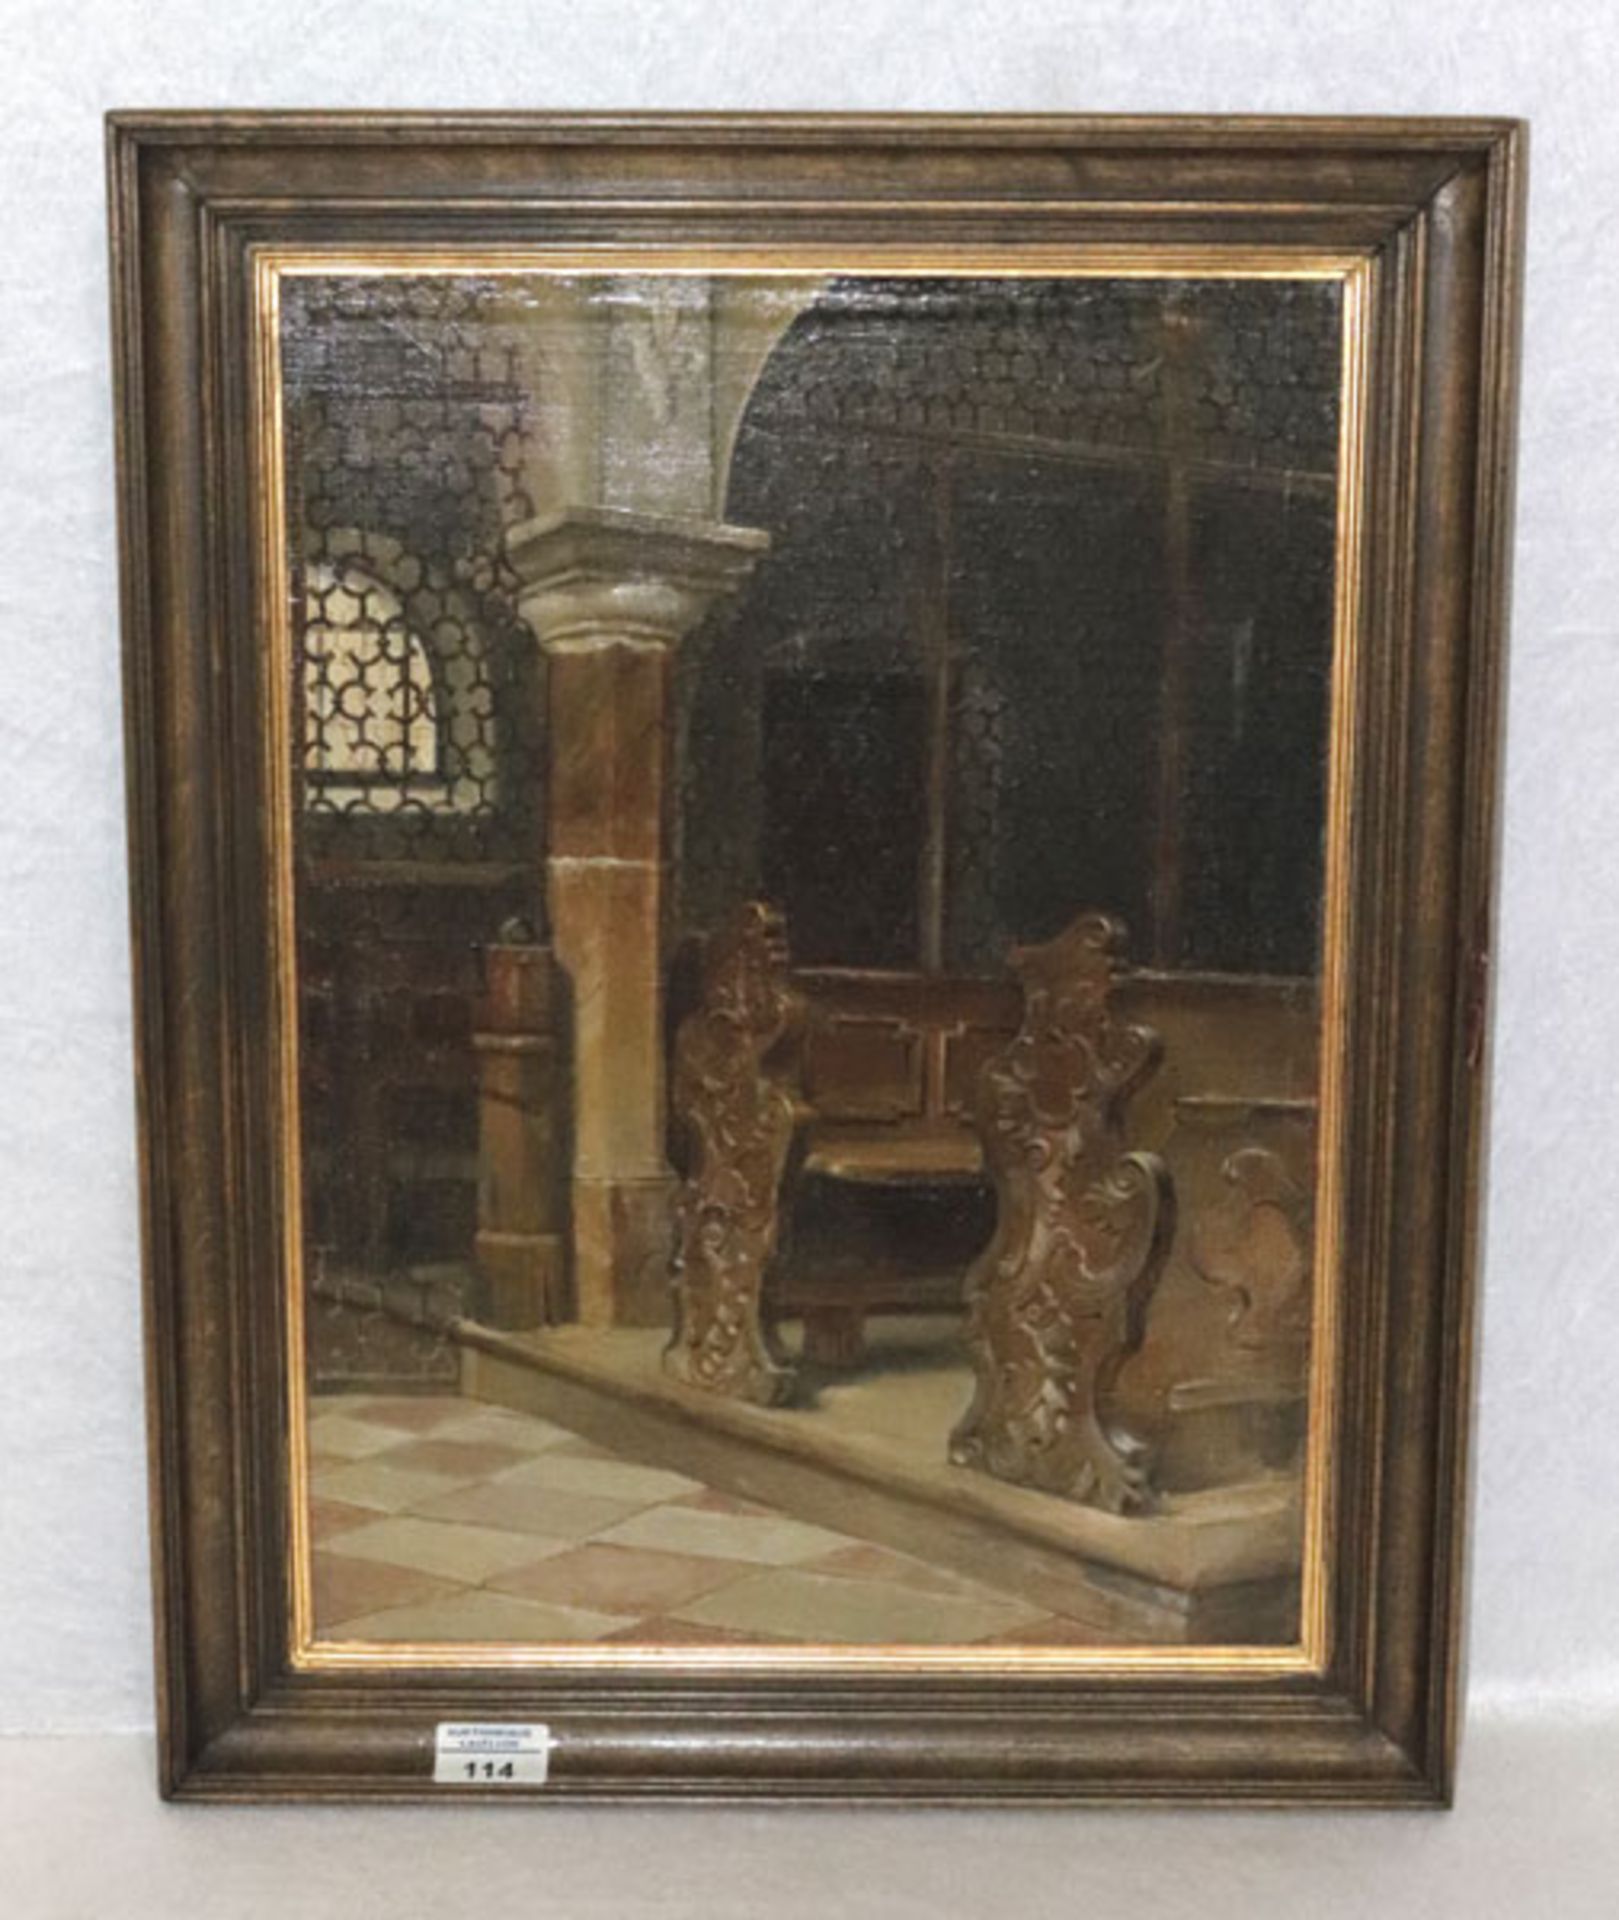 Gemälde ÖL/LW 'Kirchen-Interieur', gerahmt, Rahmen beschädigt, incl. Rahmen 57 cm x 45 cm